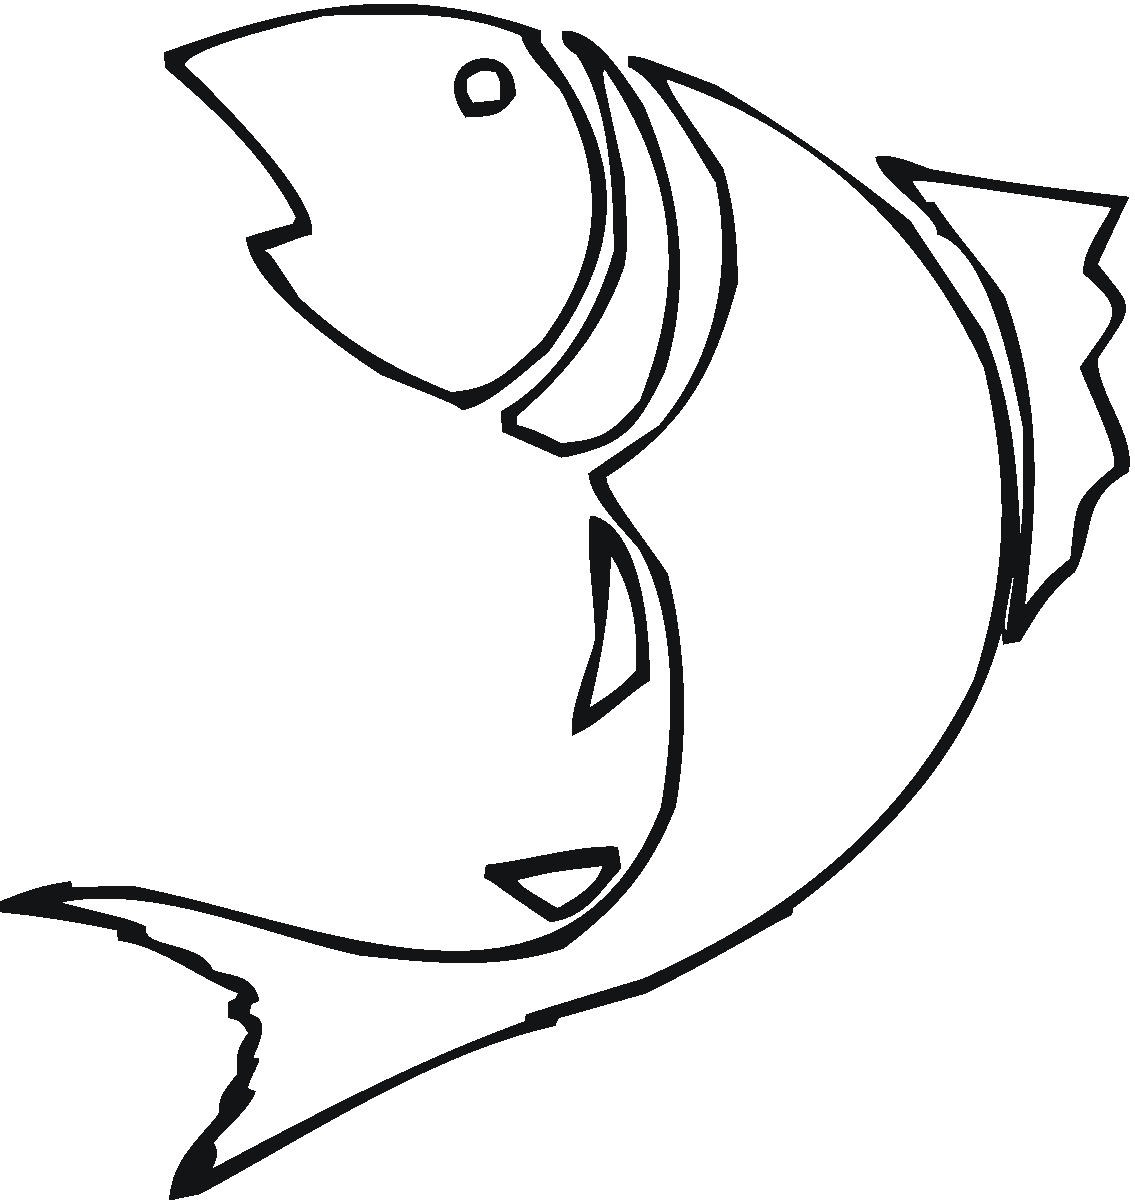 Bass Fish Outline Clip Art | Clipart Panda - Free Clipart Images